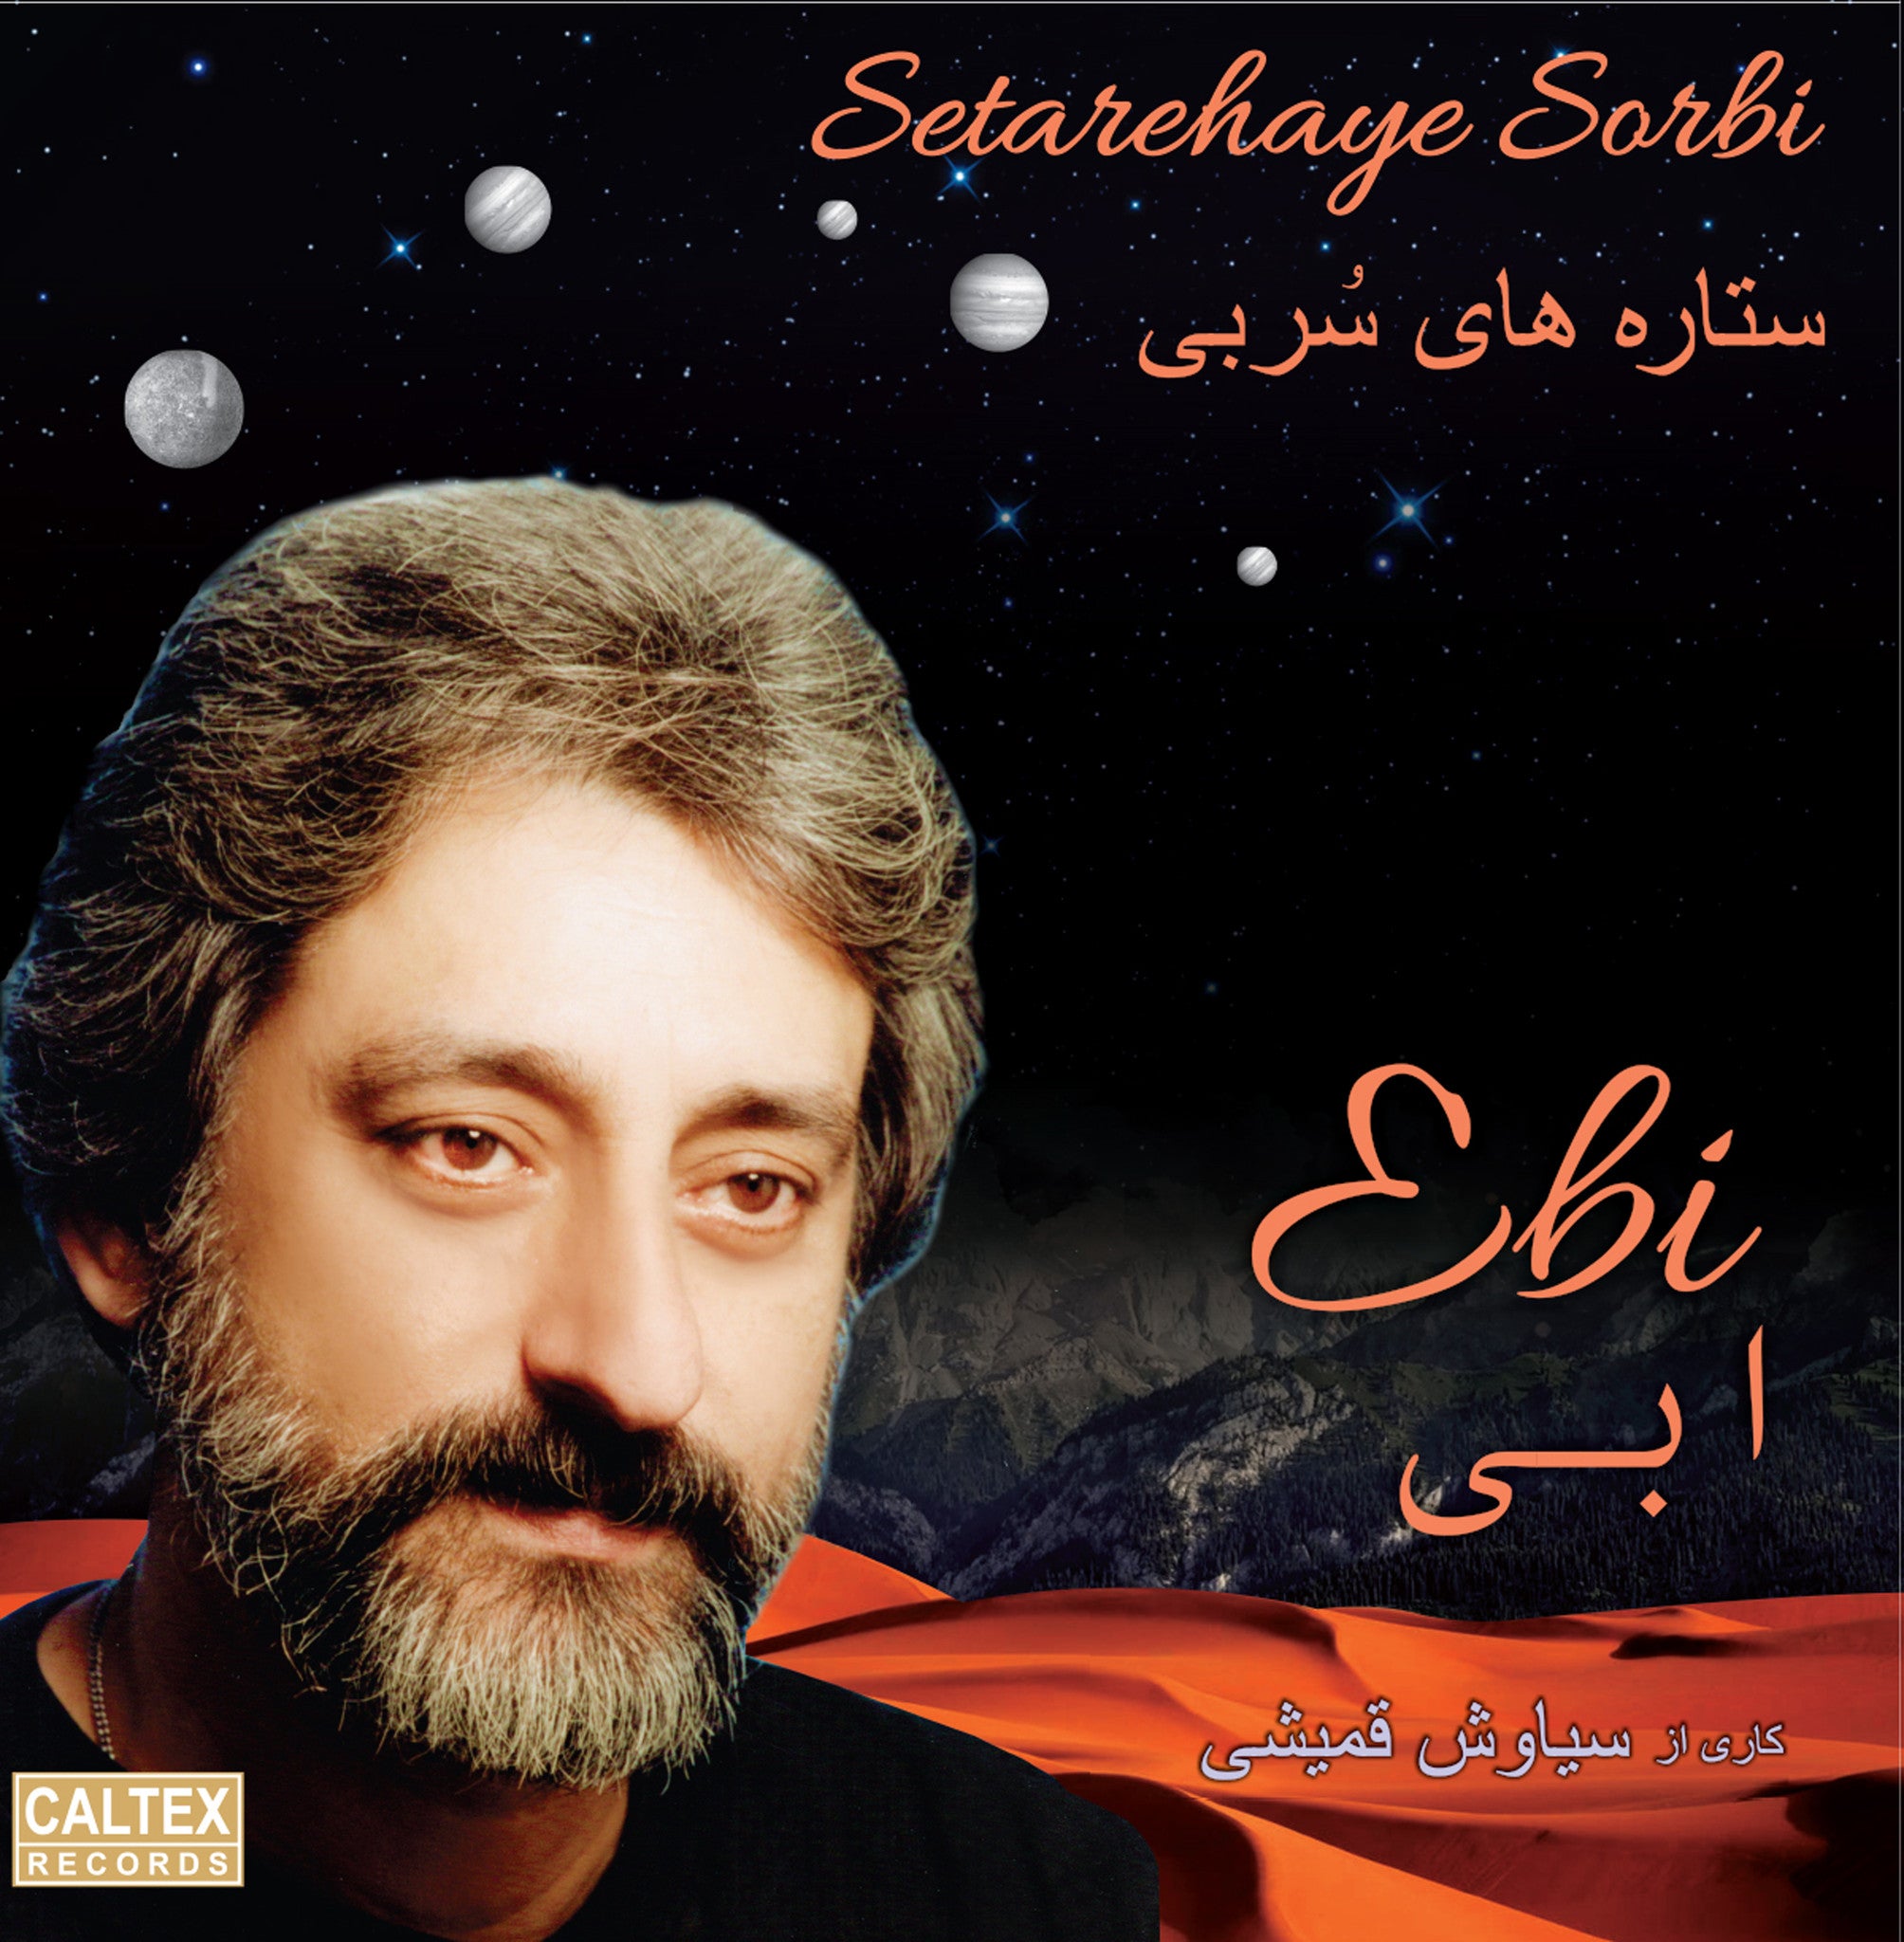 Ebi - Setarehaye Sorbi (Vinyl)